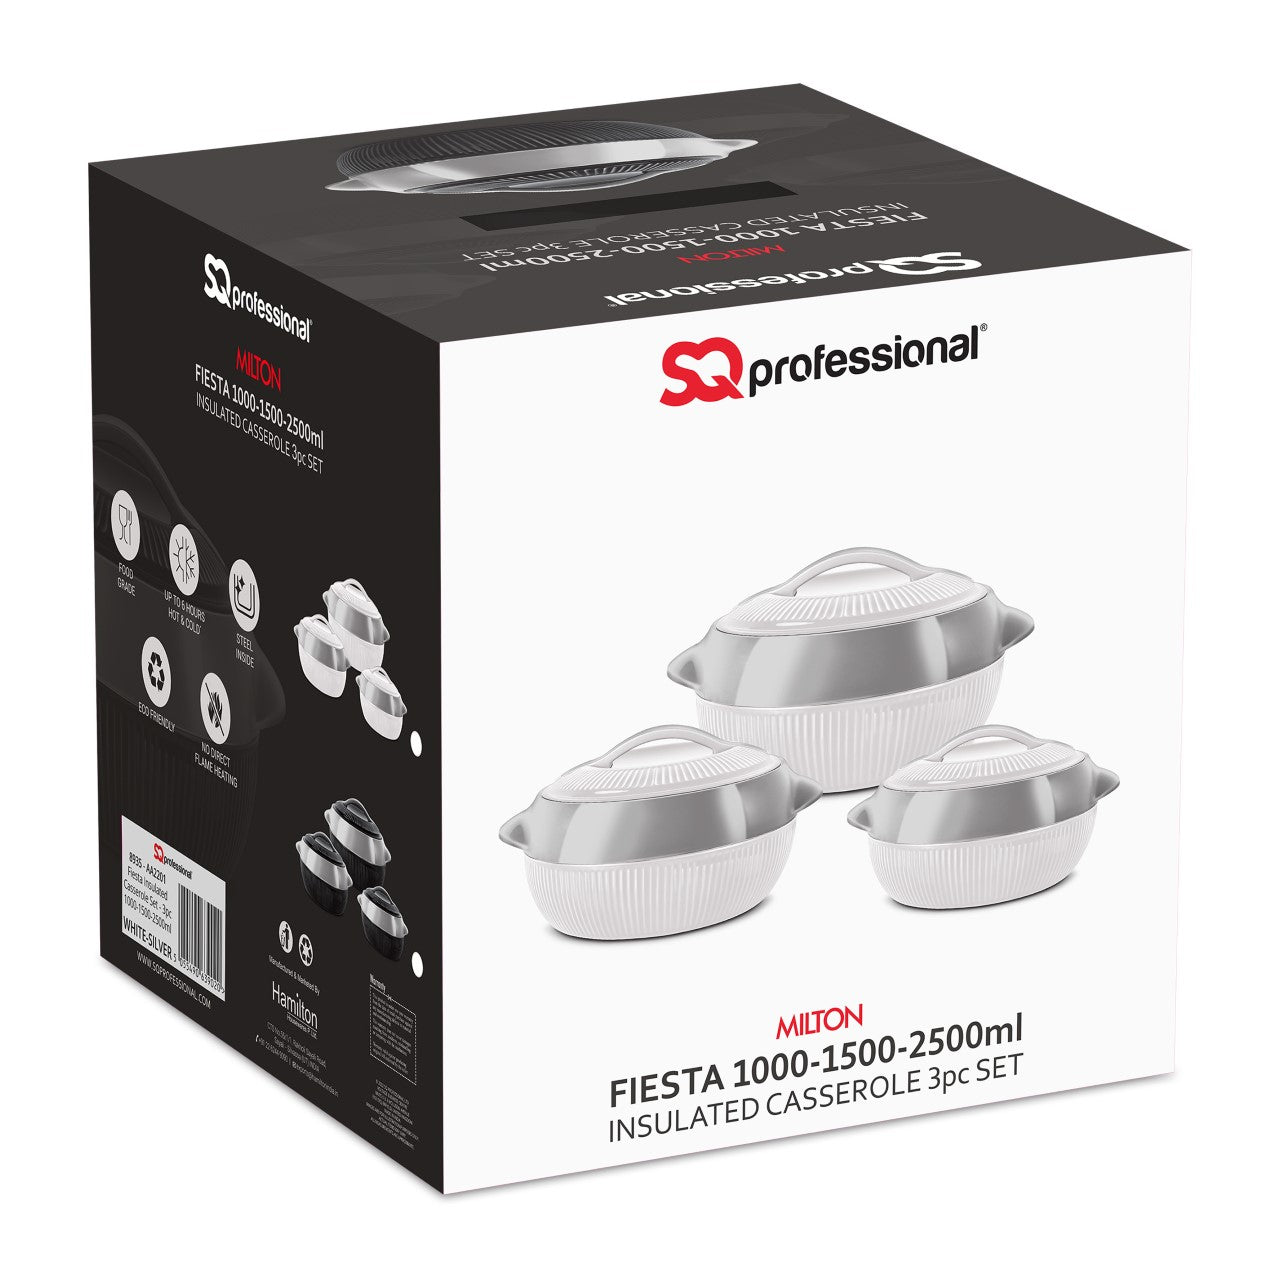 SQ Professional Fiesta Insulated Casserole 3Pc Set White-Silver 8935 (Big Parcel Rate)